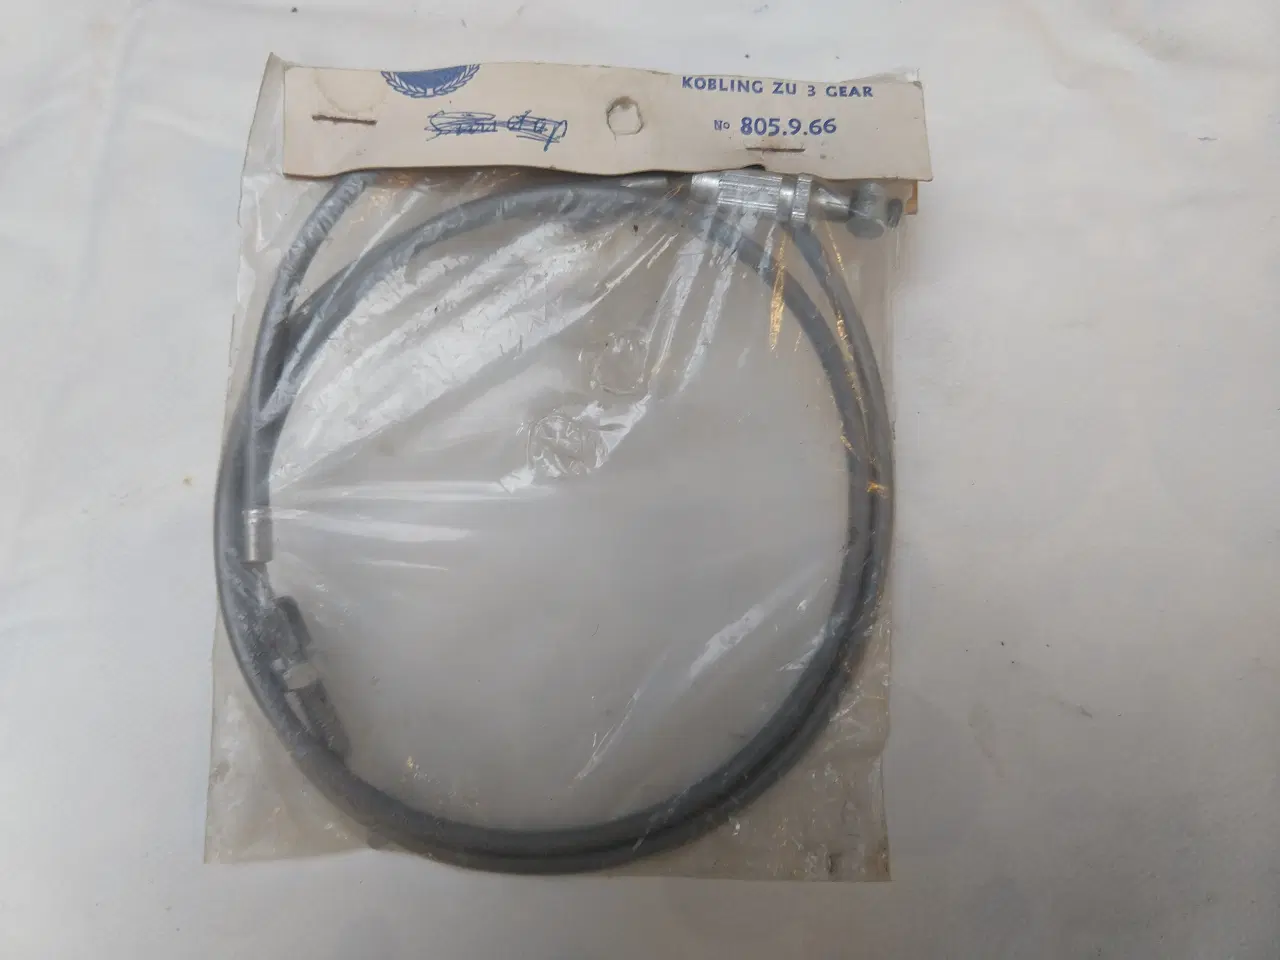 Billede 2 - Kabel Kobling ZU 3 gear